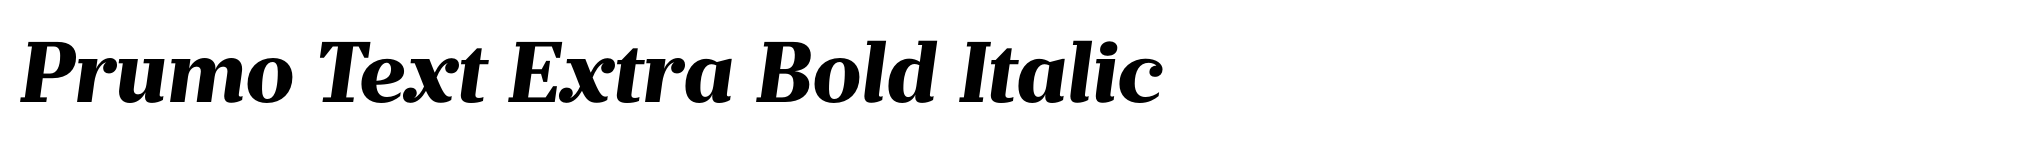 Prumo Text Extra Bold Italic image